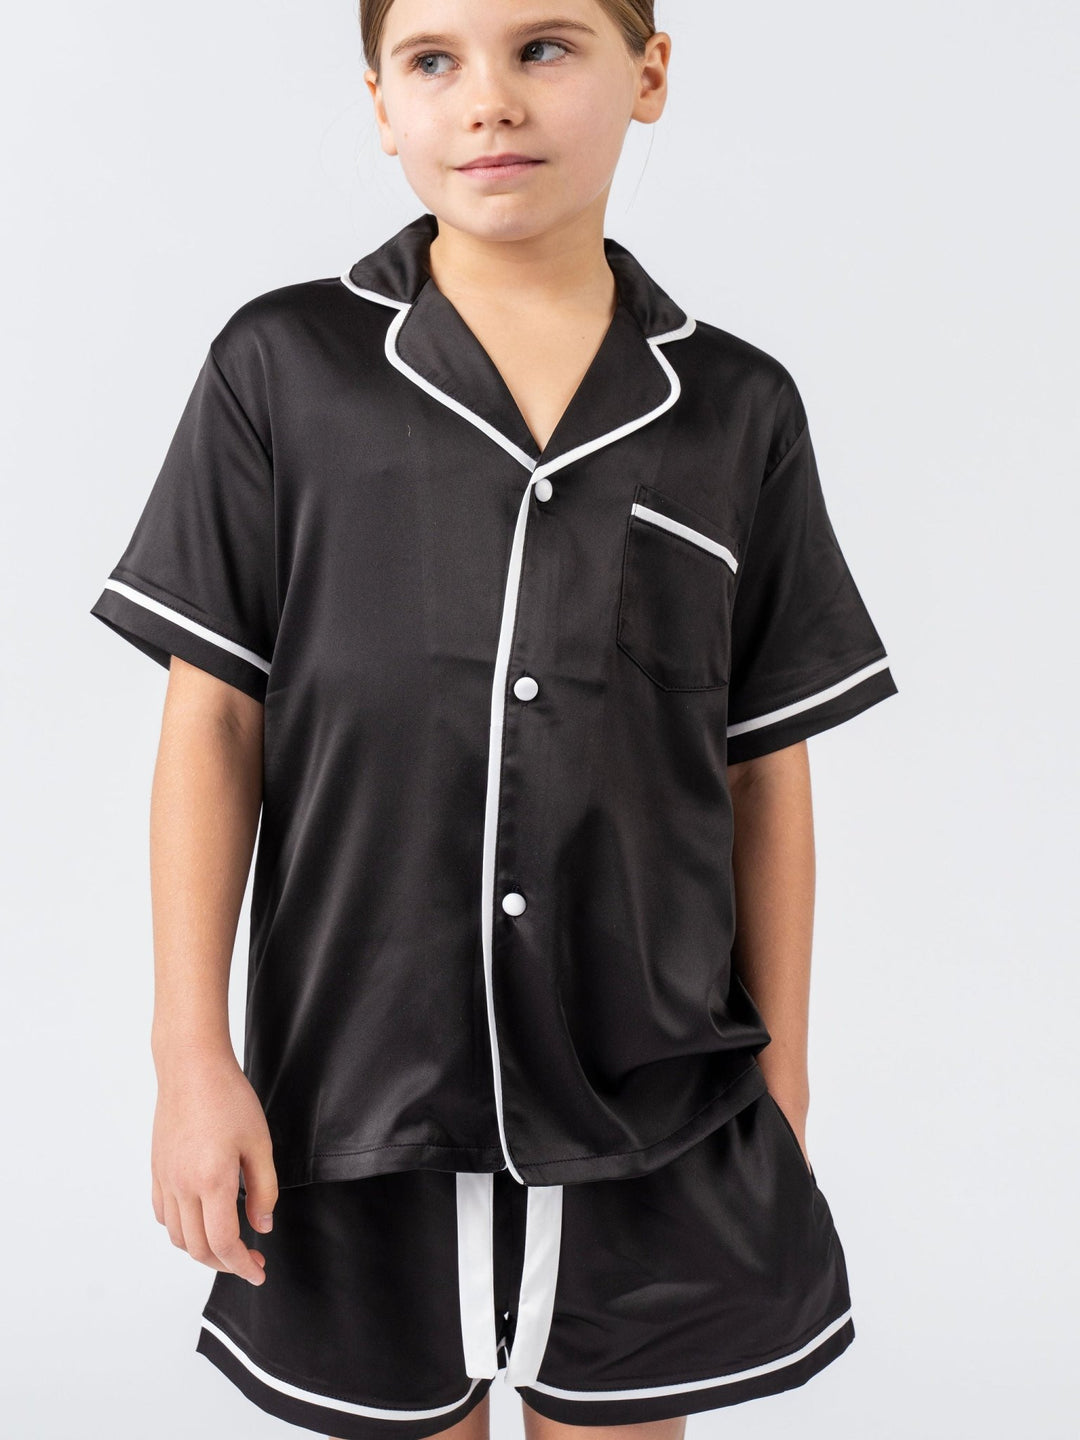 Kids Satin Personalised Pyjama Set - Short Sleeve Black/White